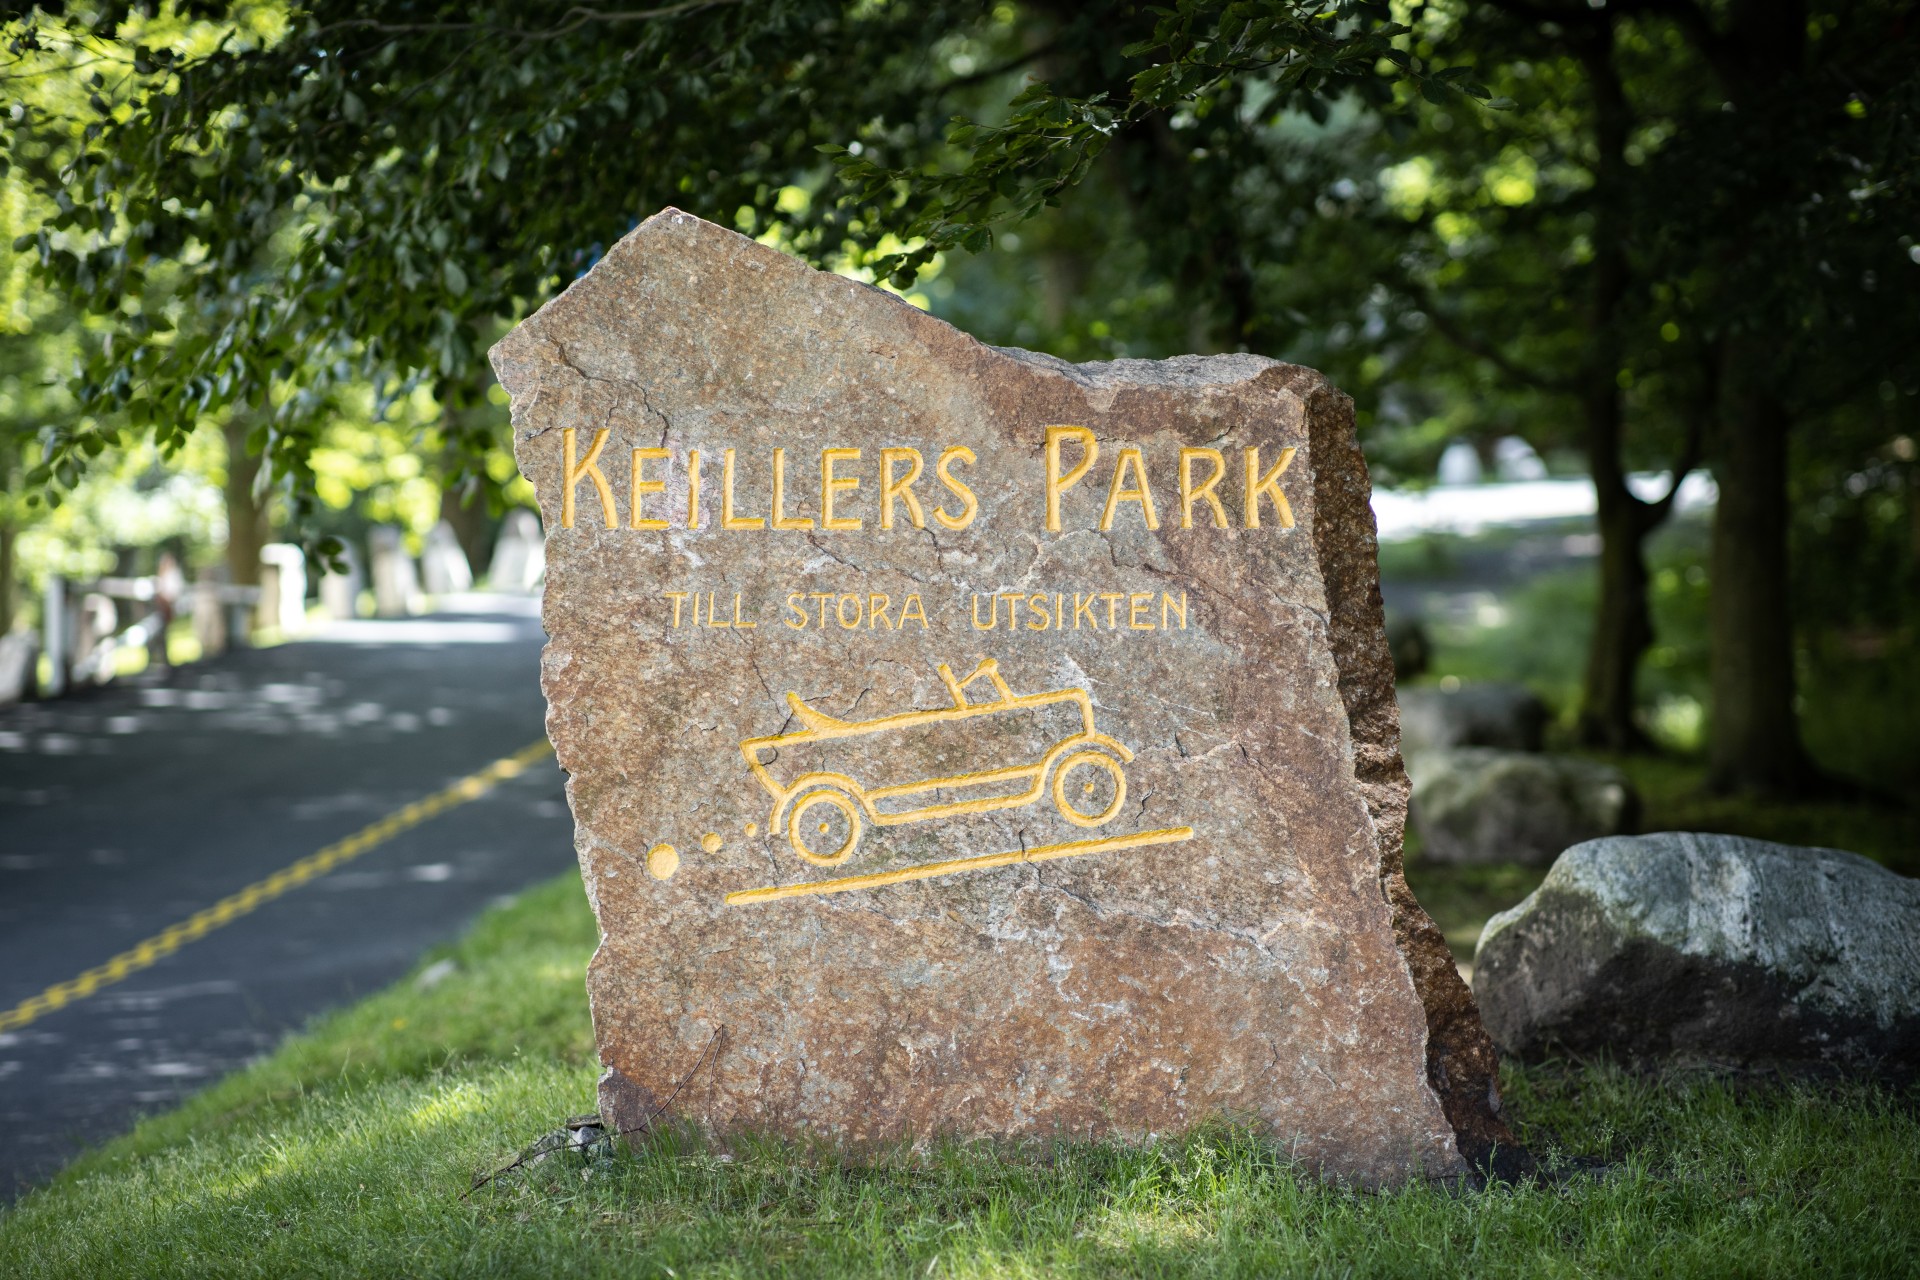 Keillers park Kvillegatan 7-15